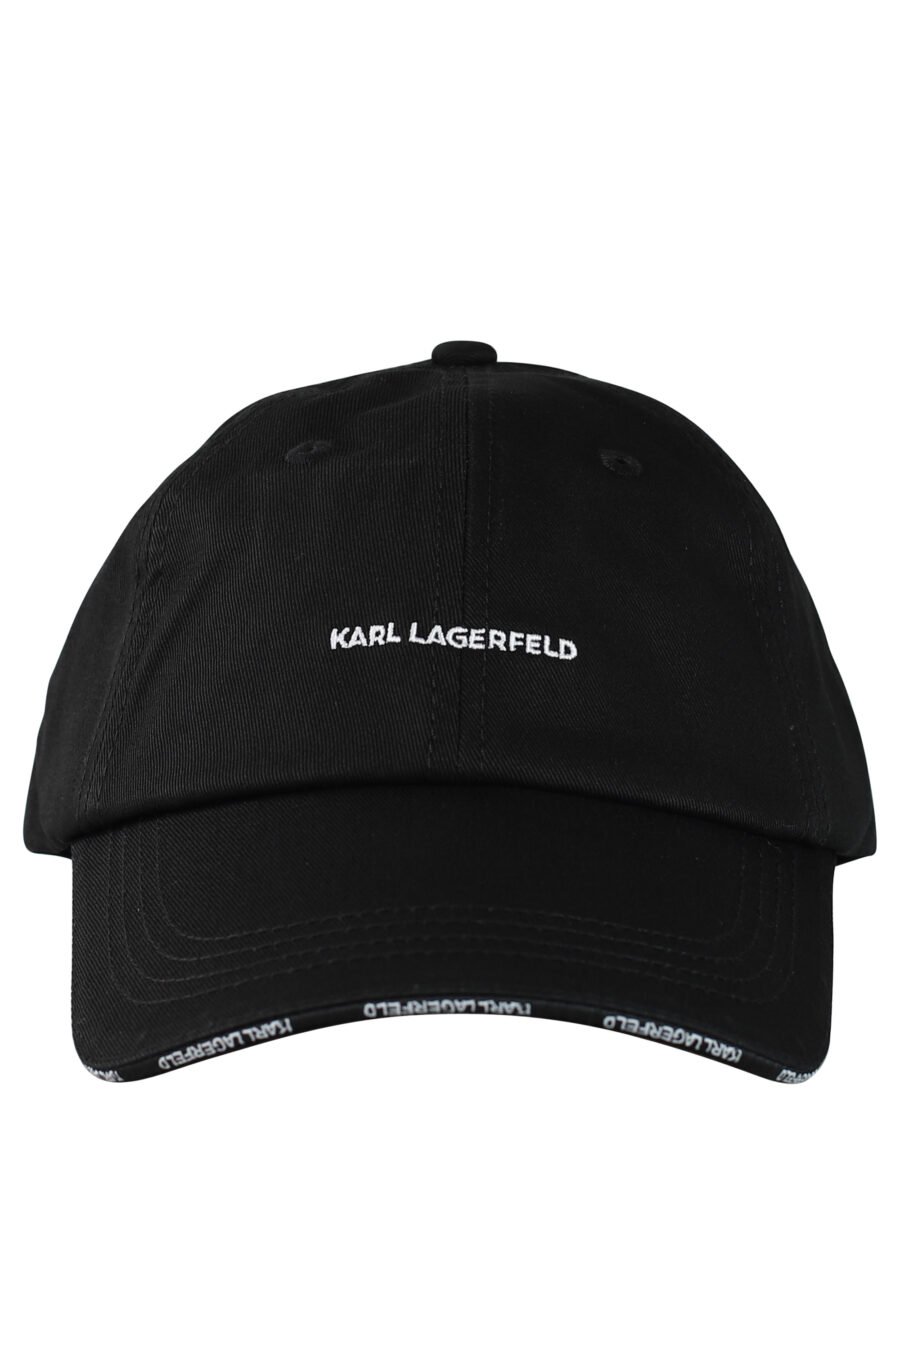 Black cap with logo on visor "essential" - 8720744104872